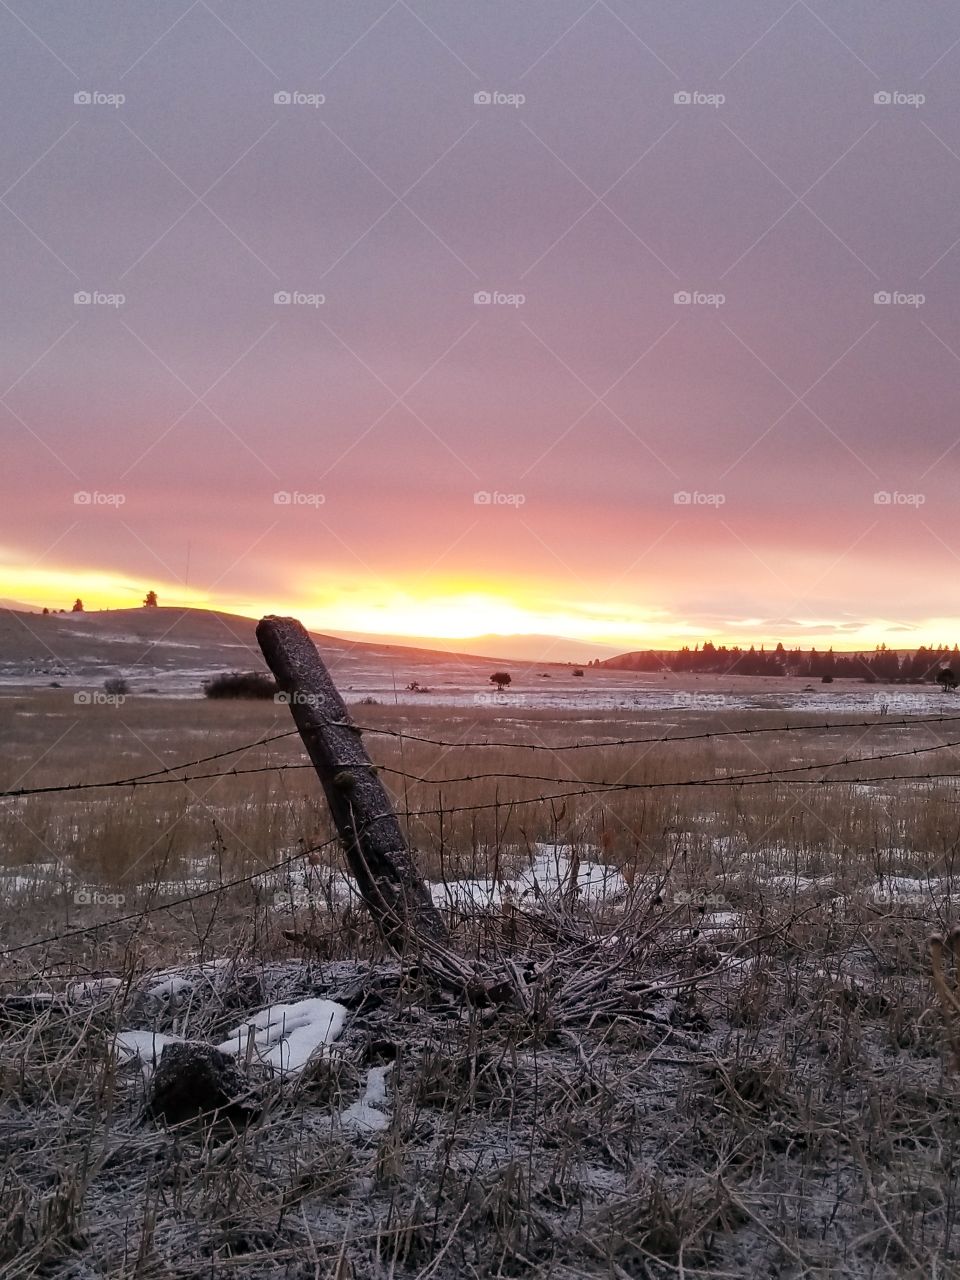 Mornings on the Prairie